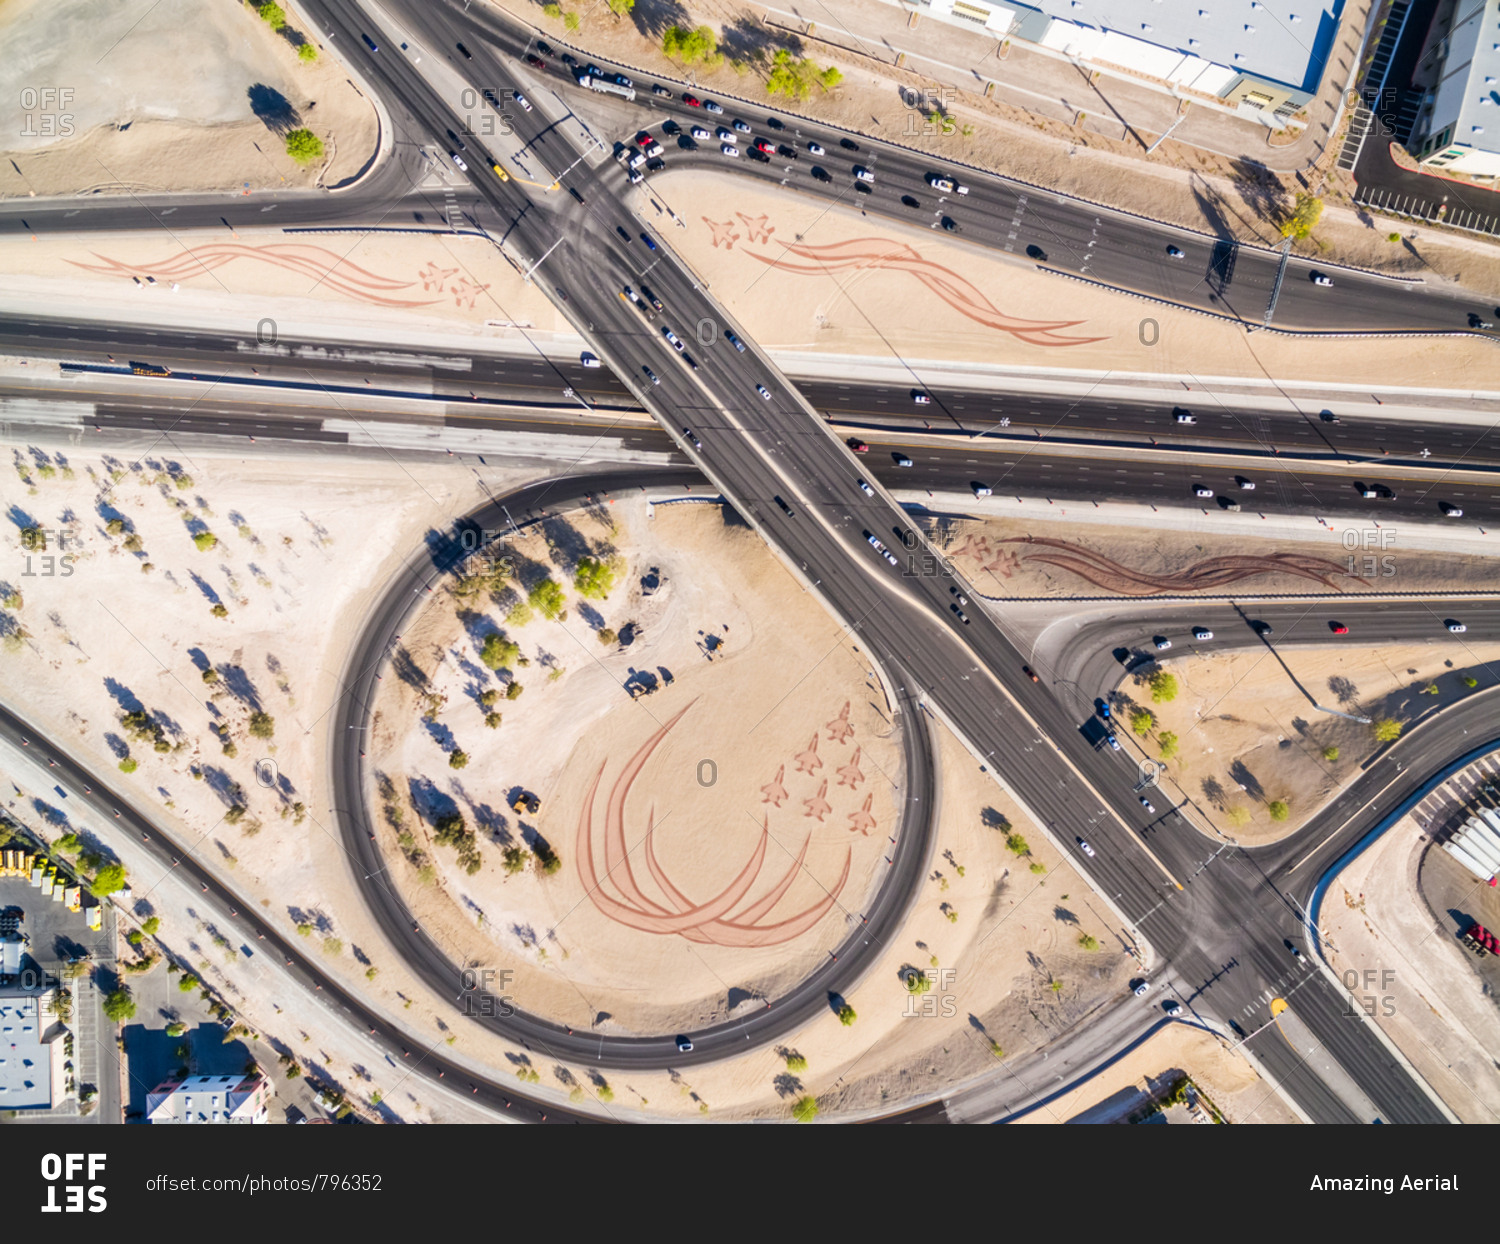 Aerial view of multi-lane road intersection on desert landscape, Las Vegas, USA.